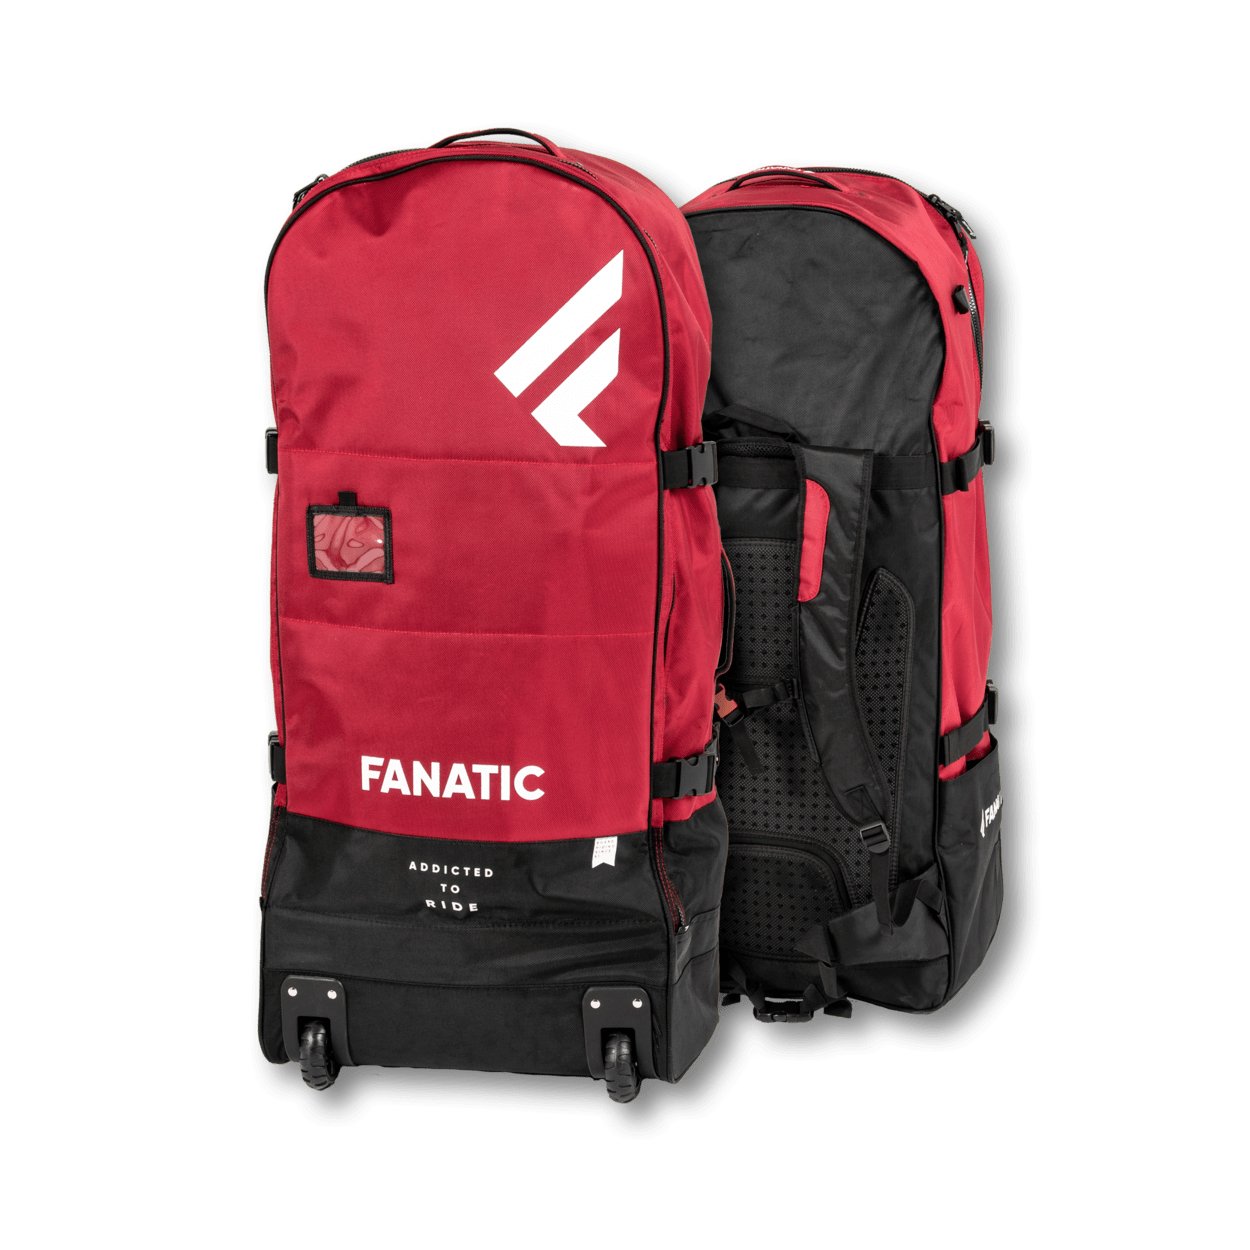 Fanatic Gearbag Premium iSUP 2023 - Worthing Watersports - 9008415927968 - Spareparts - Fanatic SUP